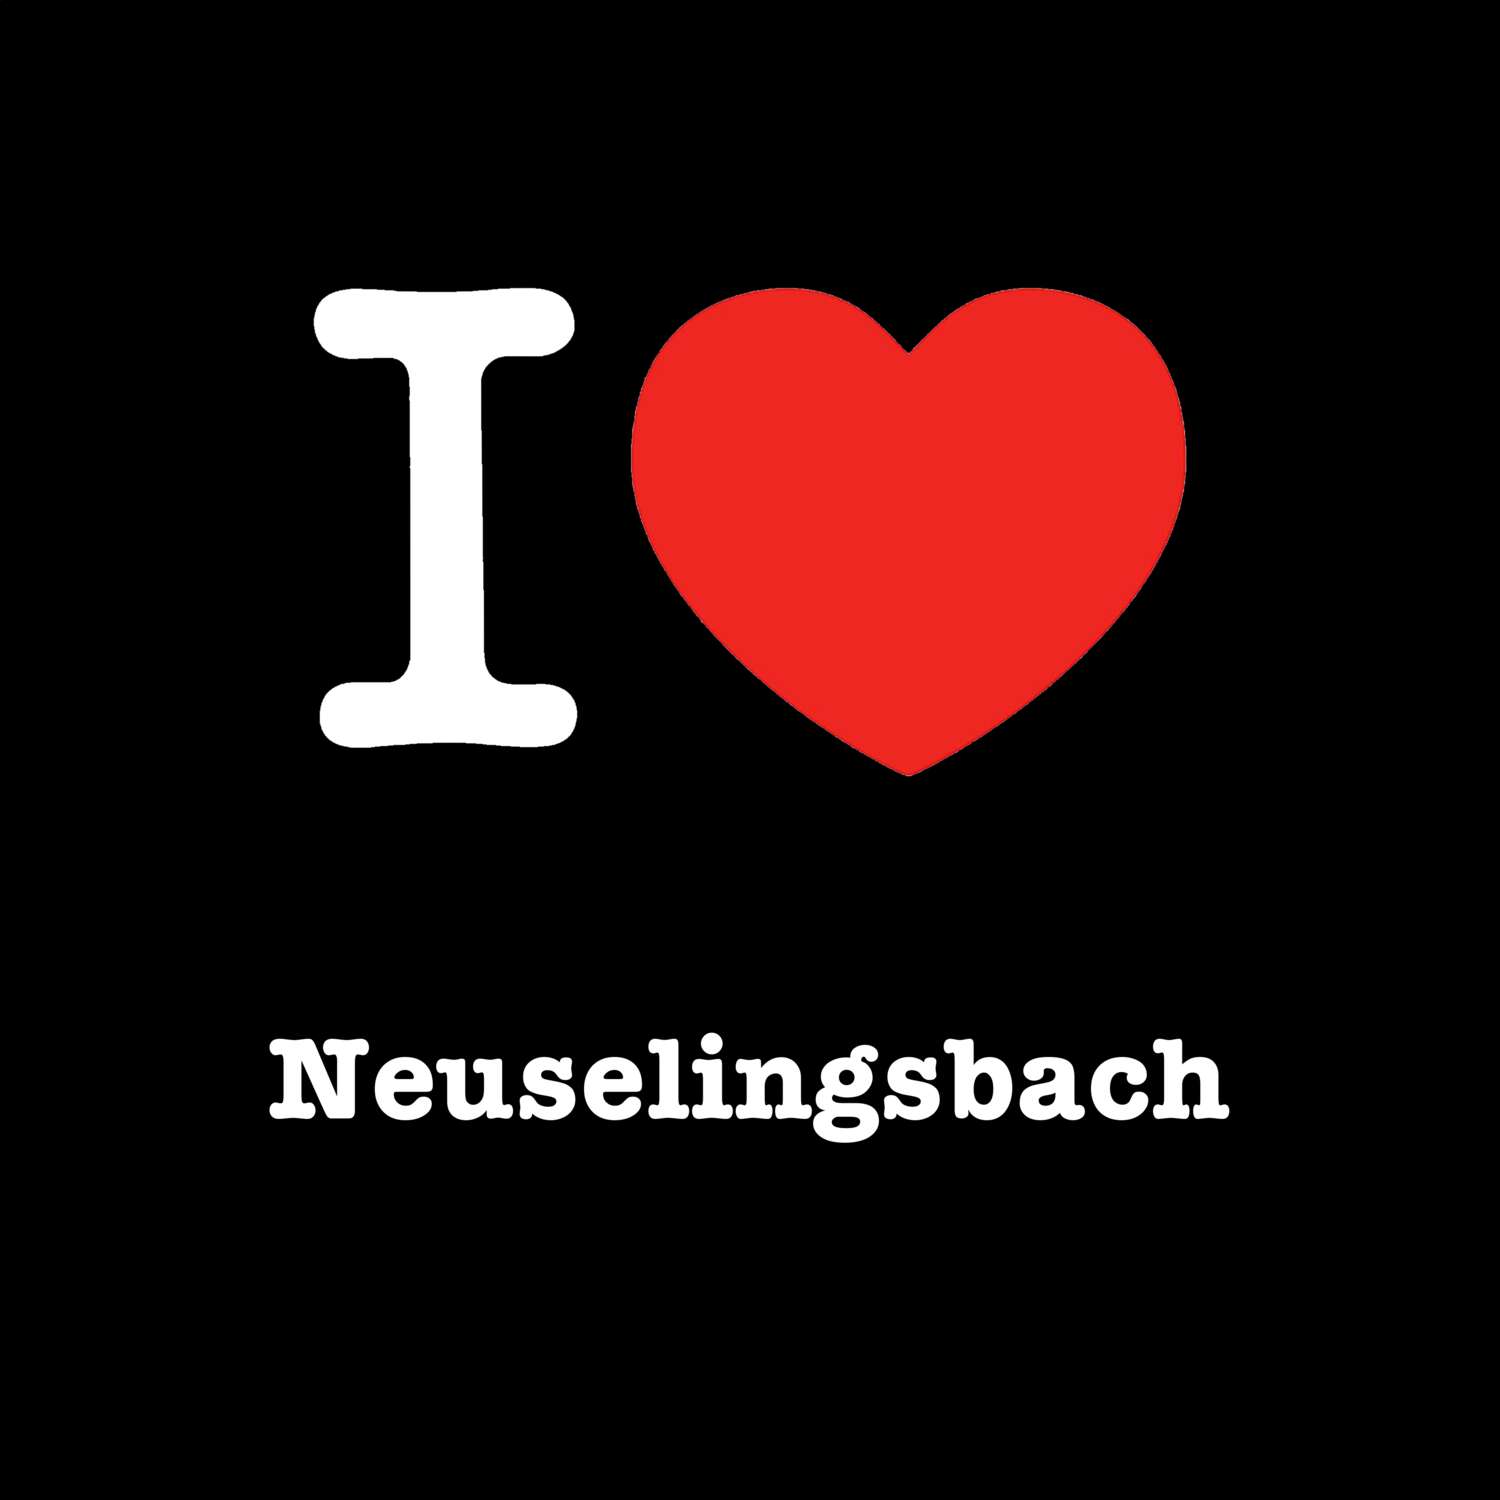 Neuselingsbach T-Shirt »I love«